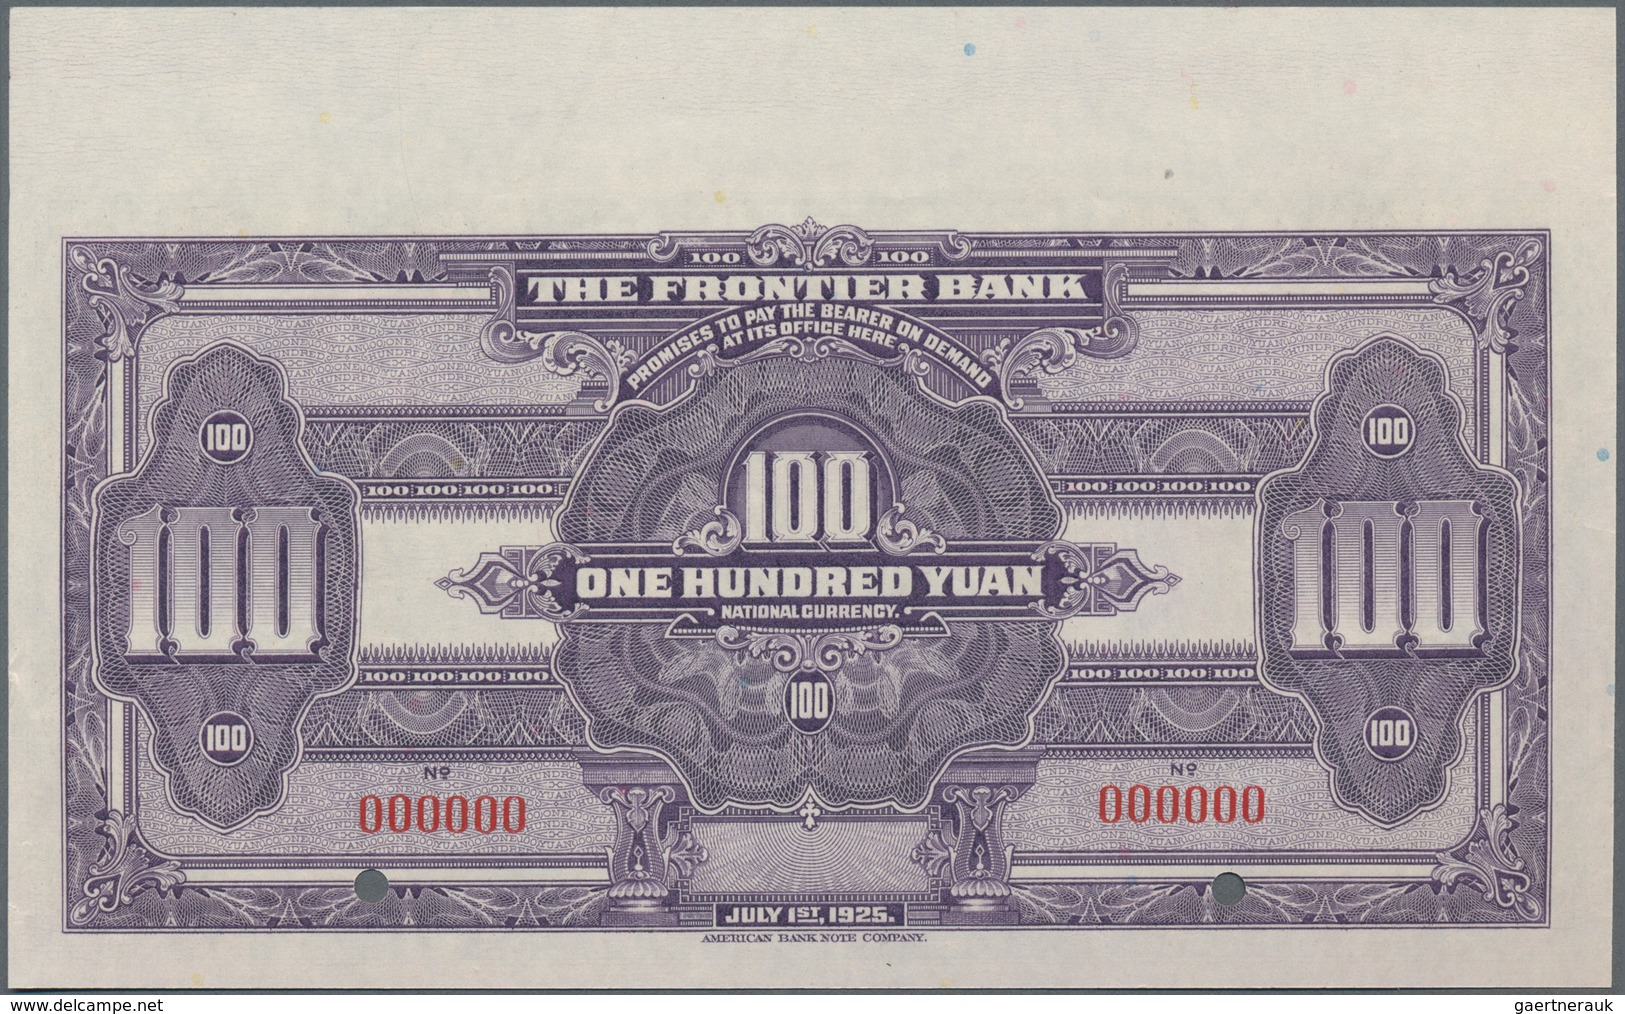 China: Frontier Bank, Harbin set with 5 banknotes series 1925 comprising 1, 5, 10, 50 and 100 Yuan S